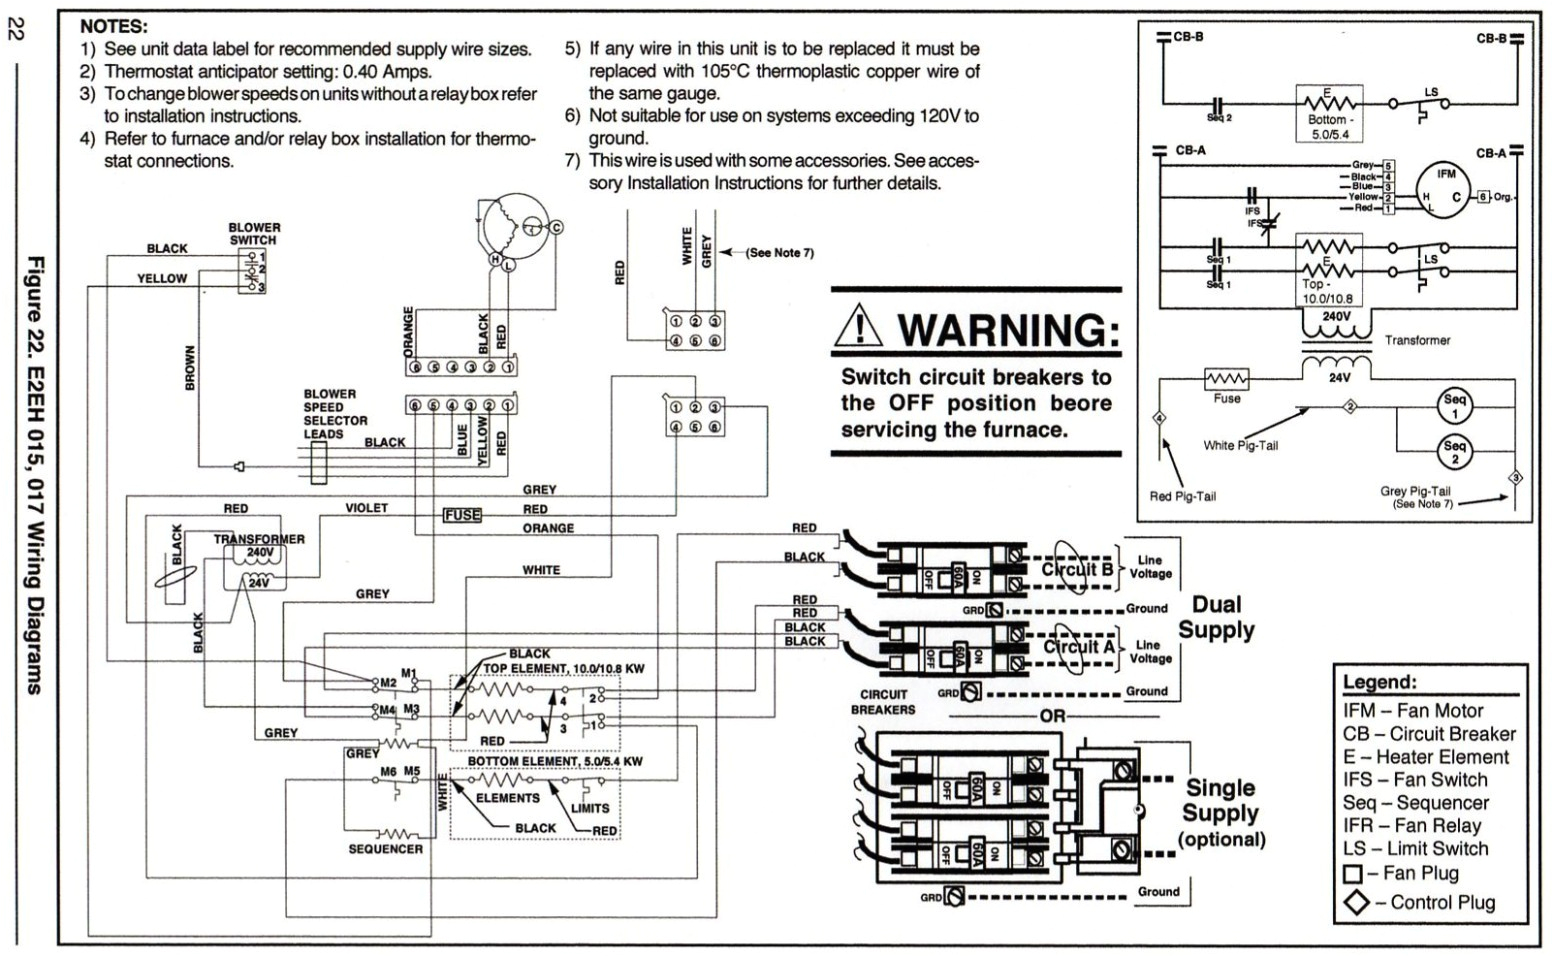 wiring schematic for intertherm furnace wiring diagram files intertherm furnace e2eb 017ha wiring diagram